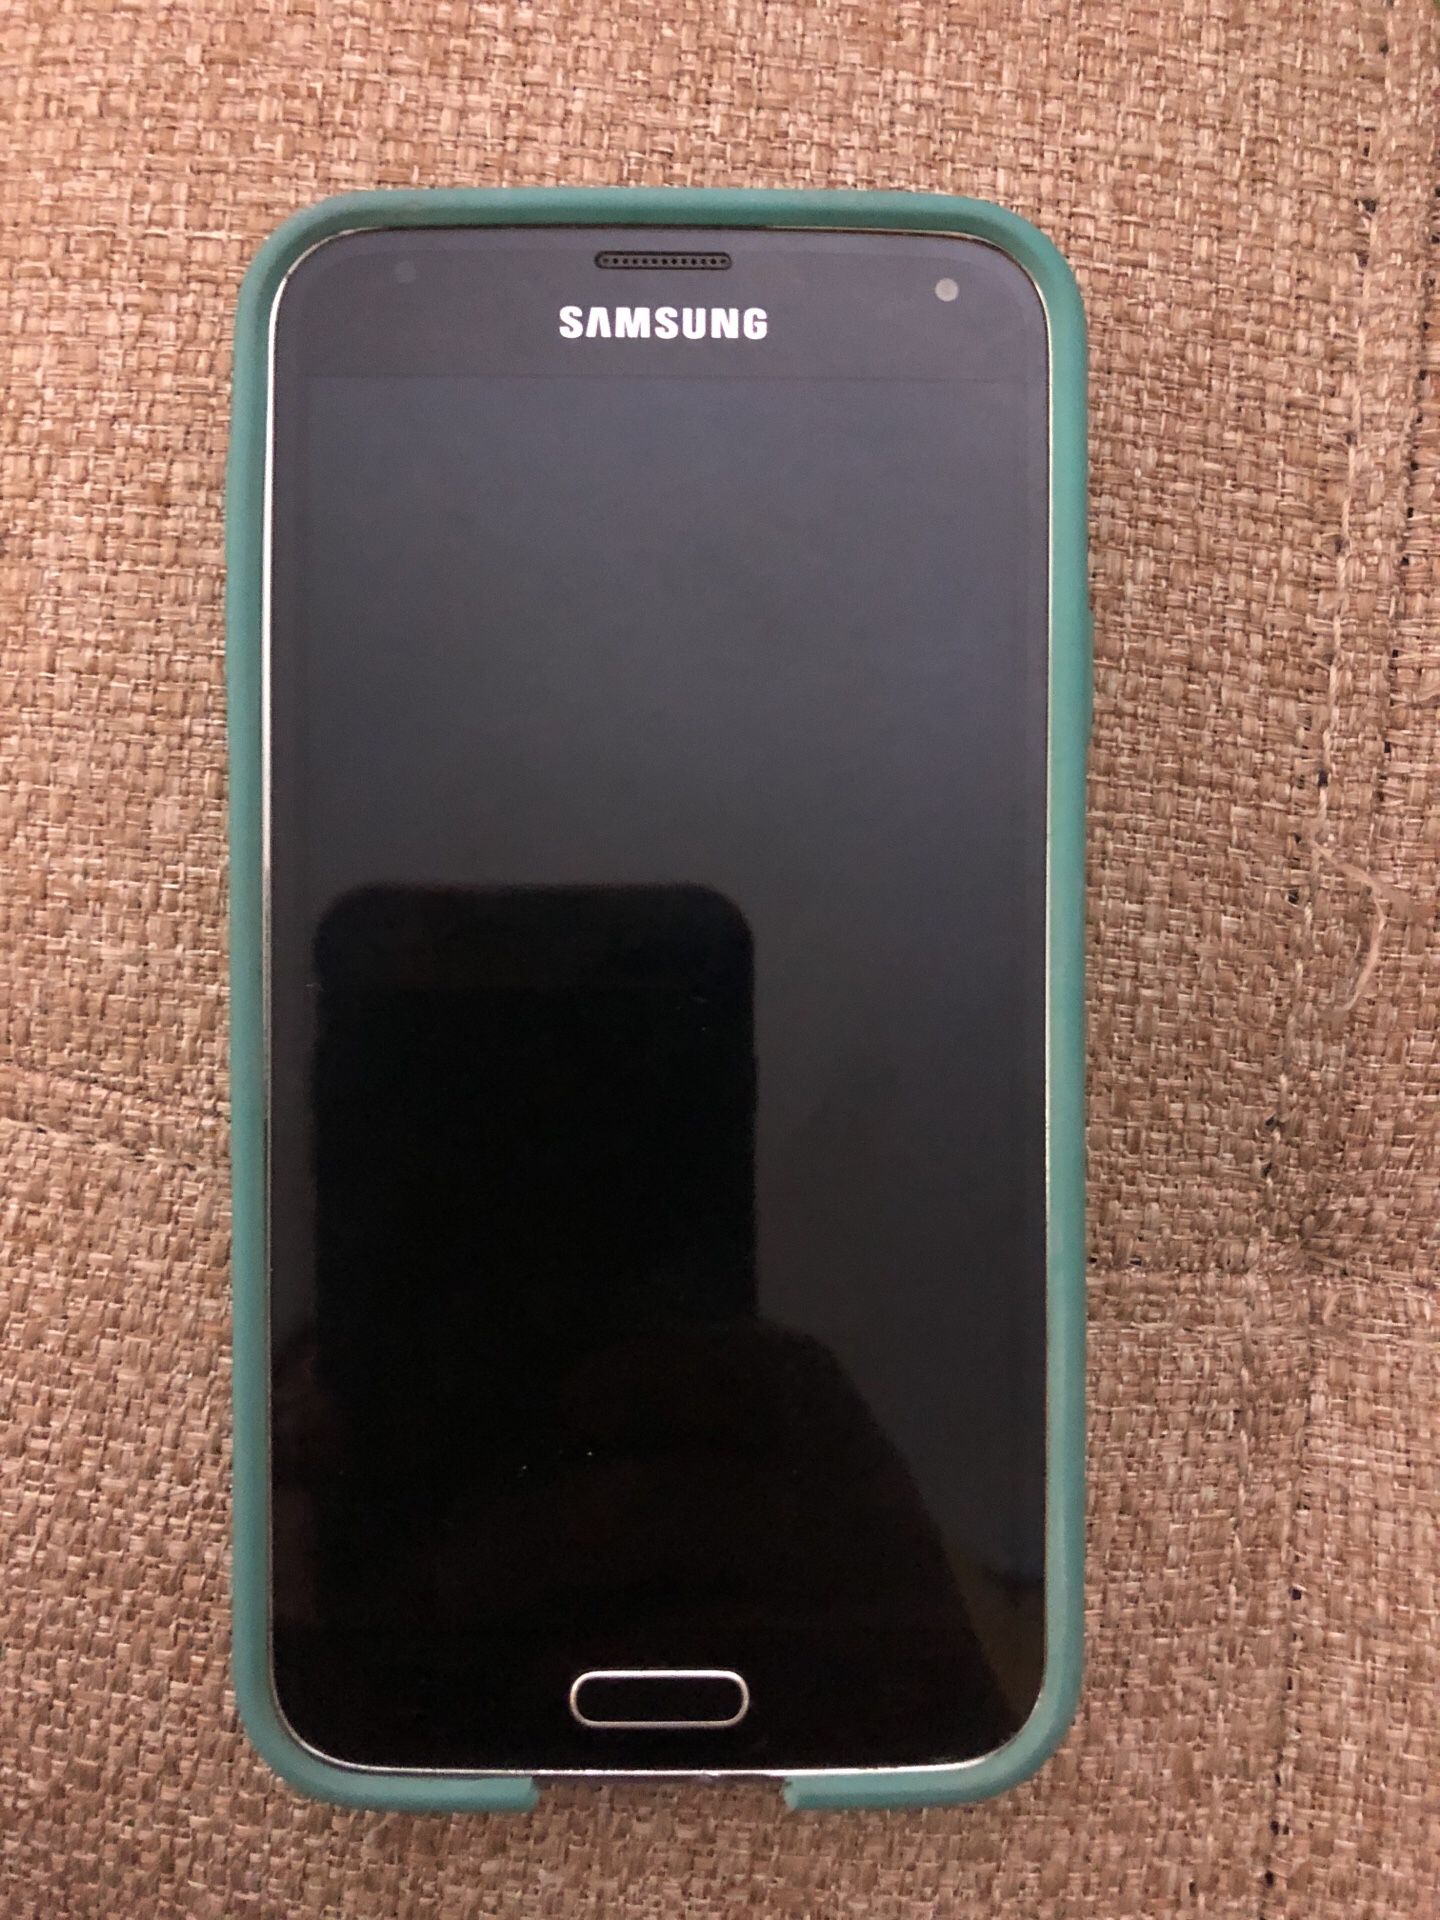 Samsung Galaxy 5S phone